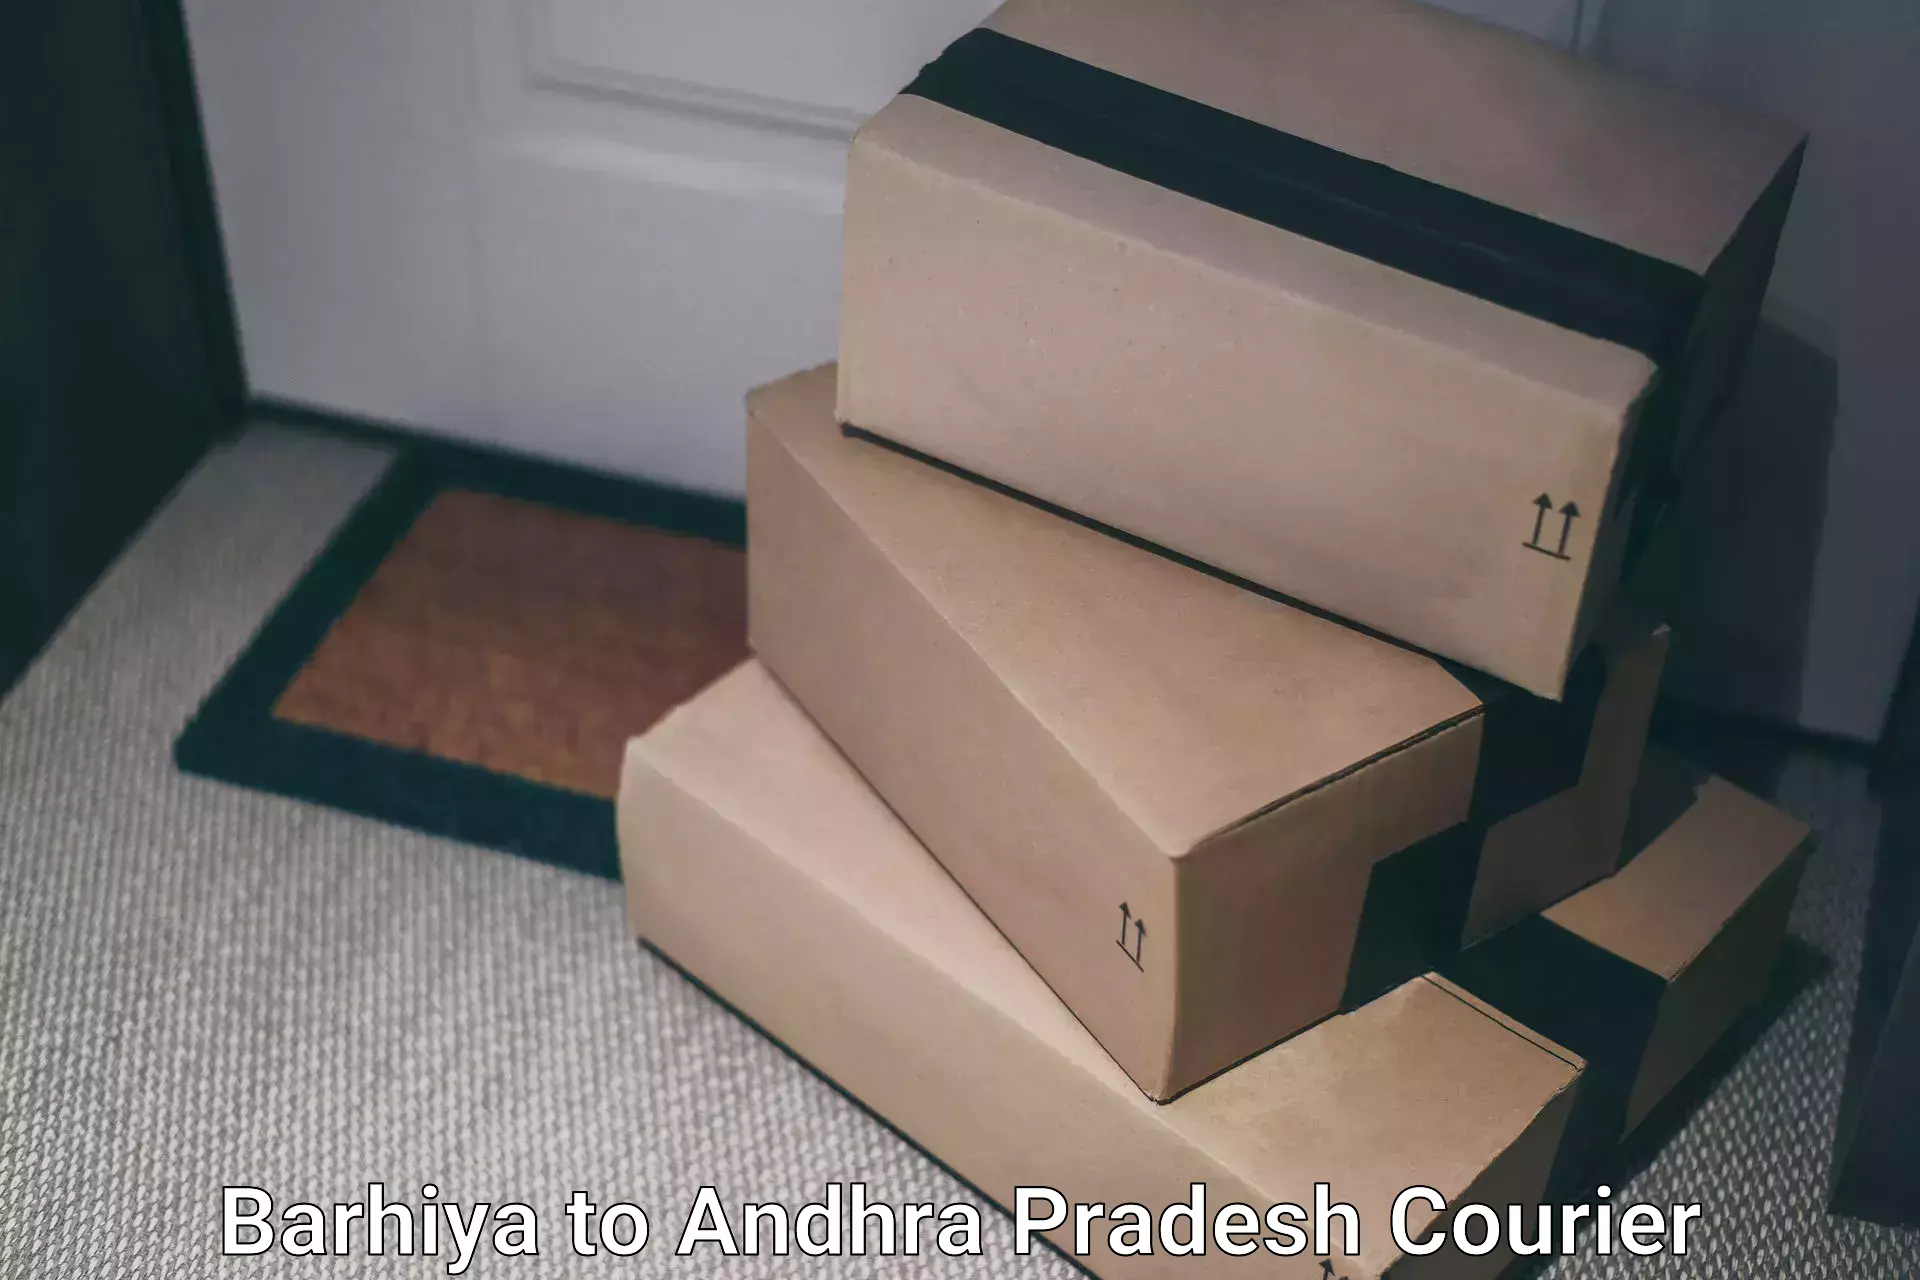 Diverse delivery methods in Barhiya to Gajapathinagaram